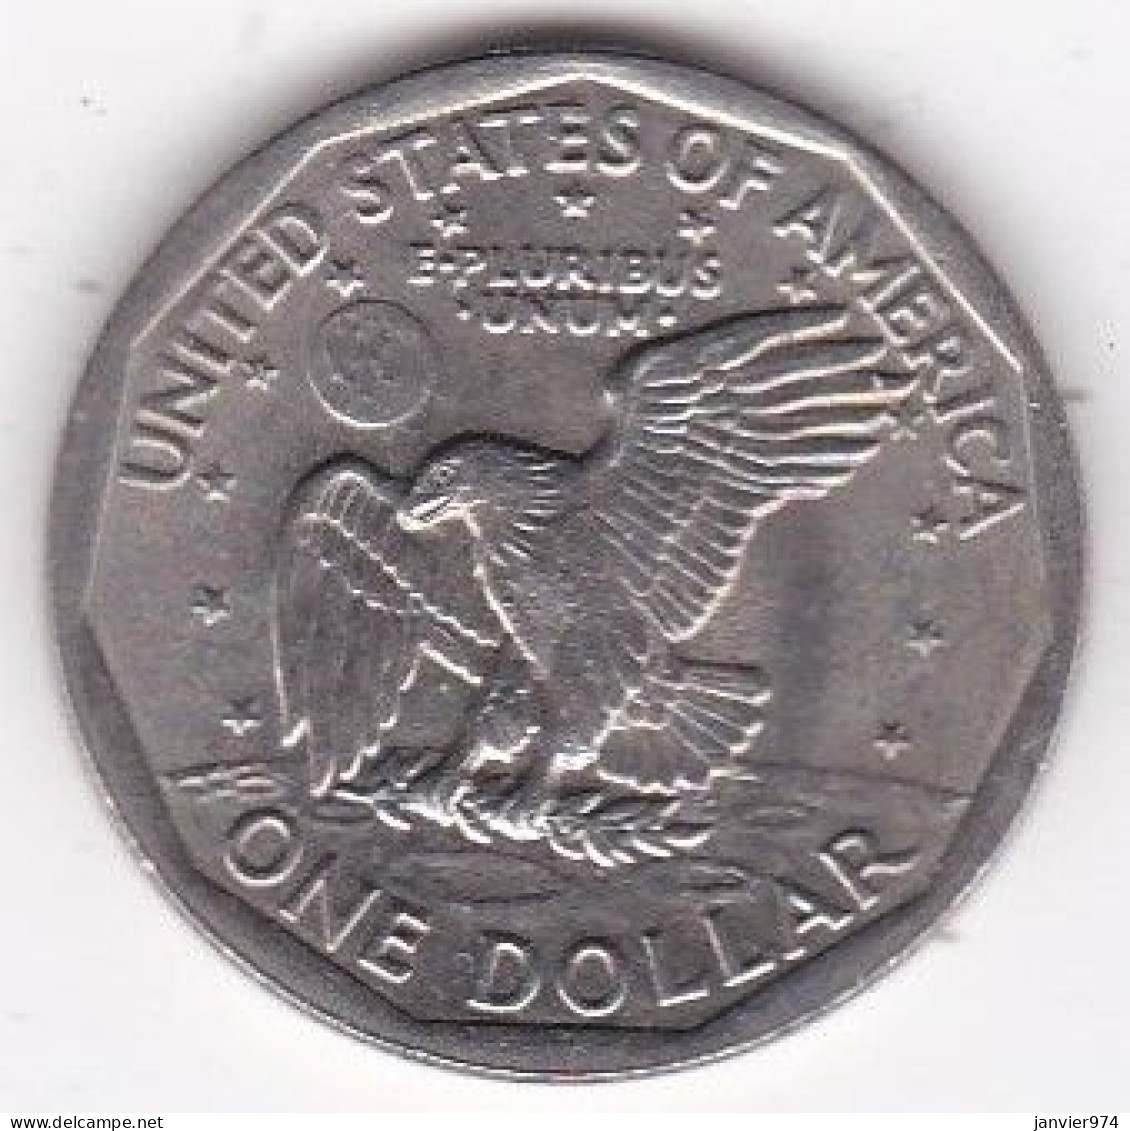 Etats Unis One Dollar 1979 P Philadelphie , Susan B. Anthony. En Cuivre Plaqué Cupronickel, KM# 207 - 1979-1999: Anthony